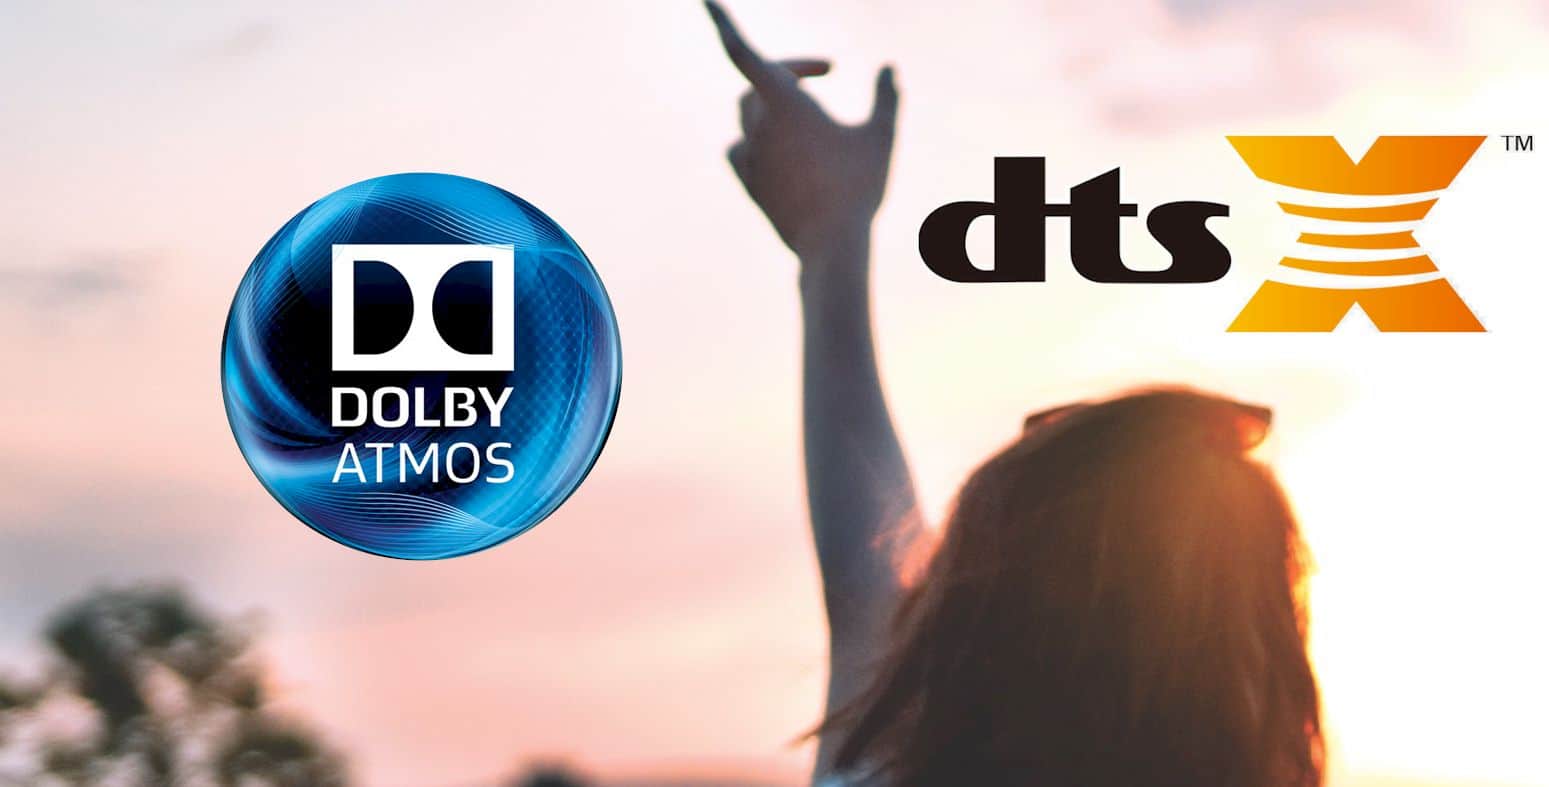 Dolby Atmos vs. DTS x